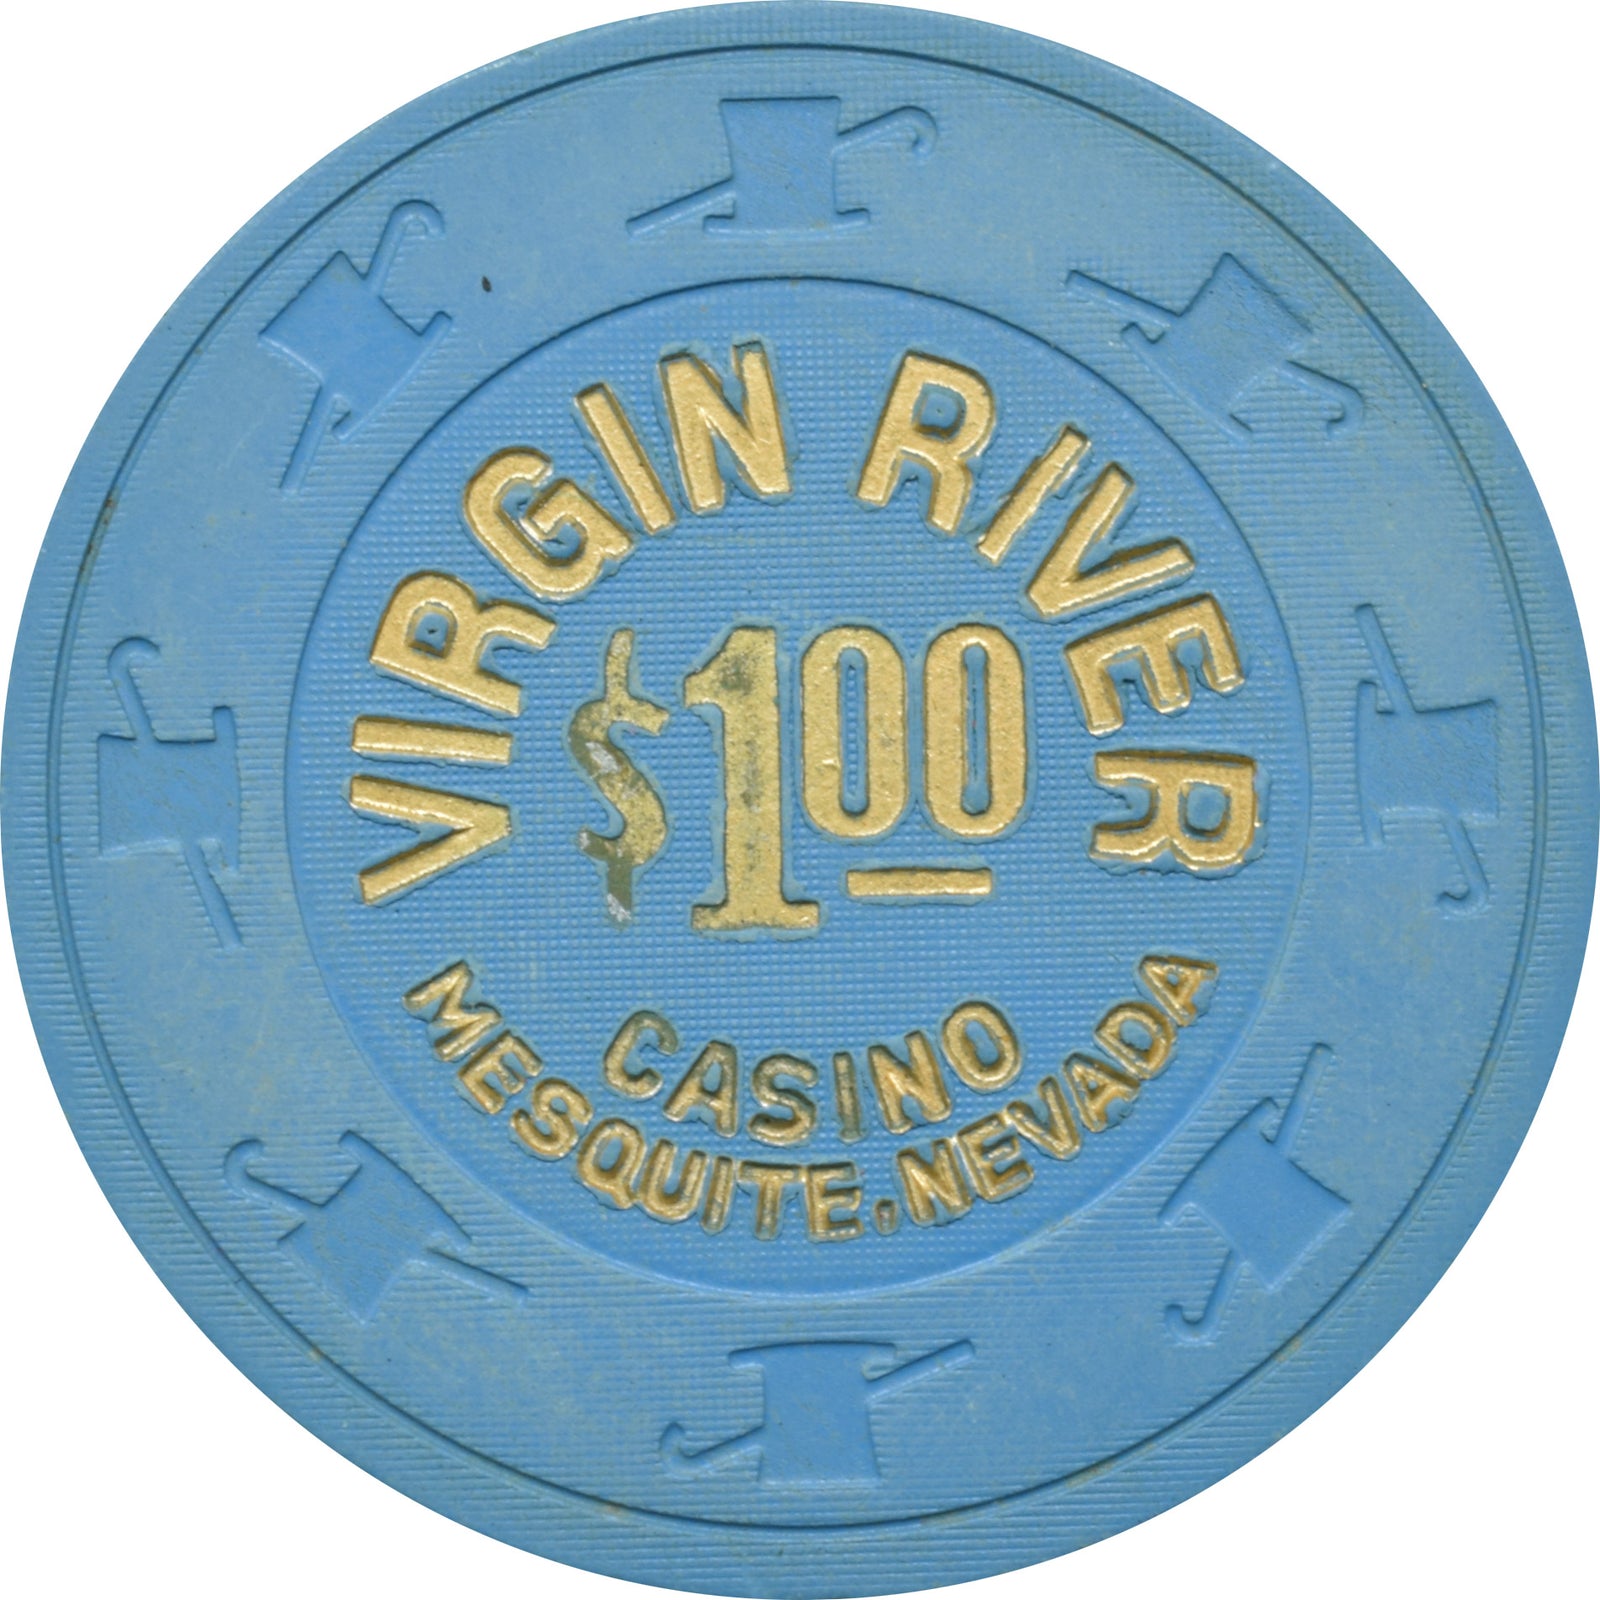 virgin river casino buffet prices thanksgiving